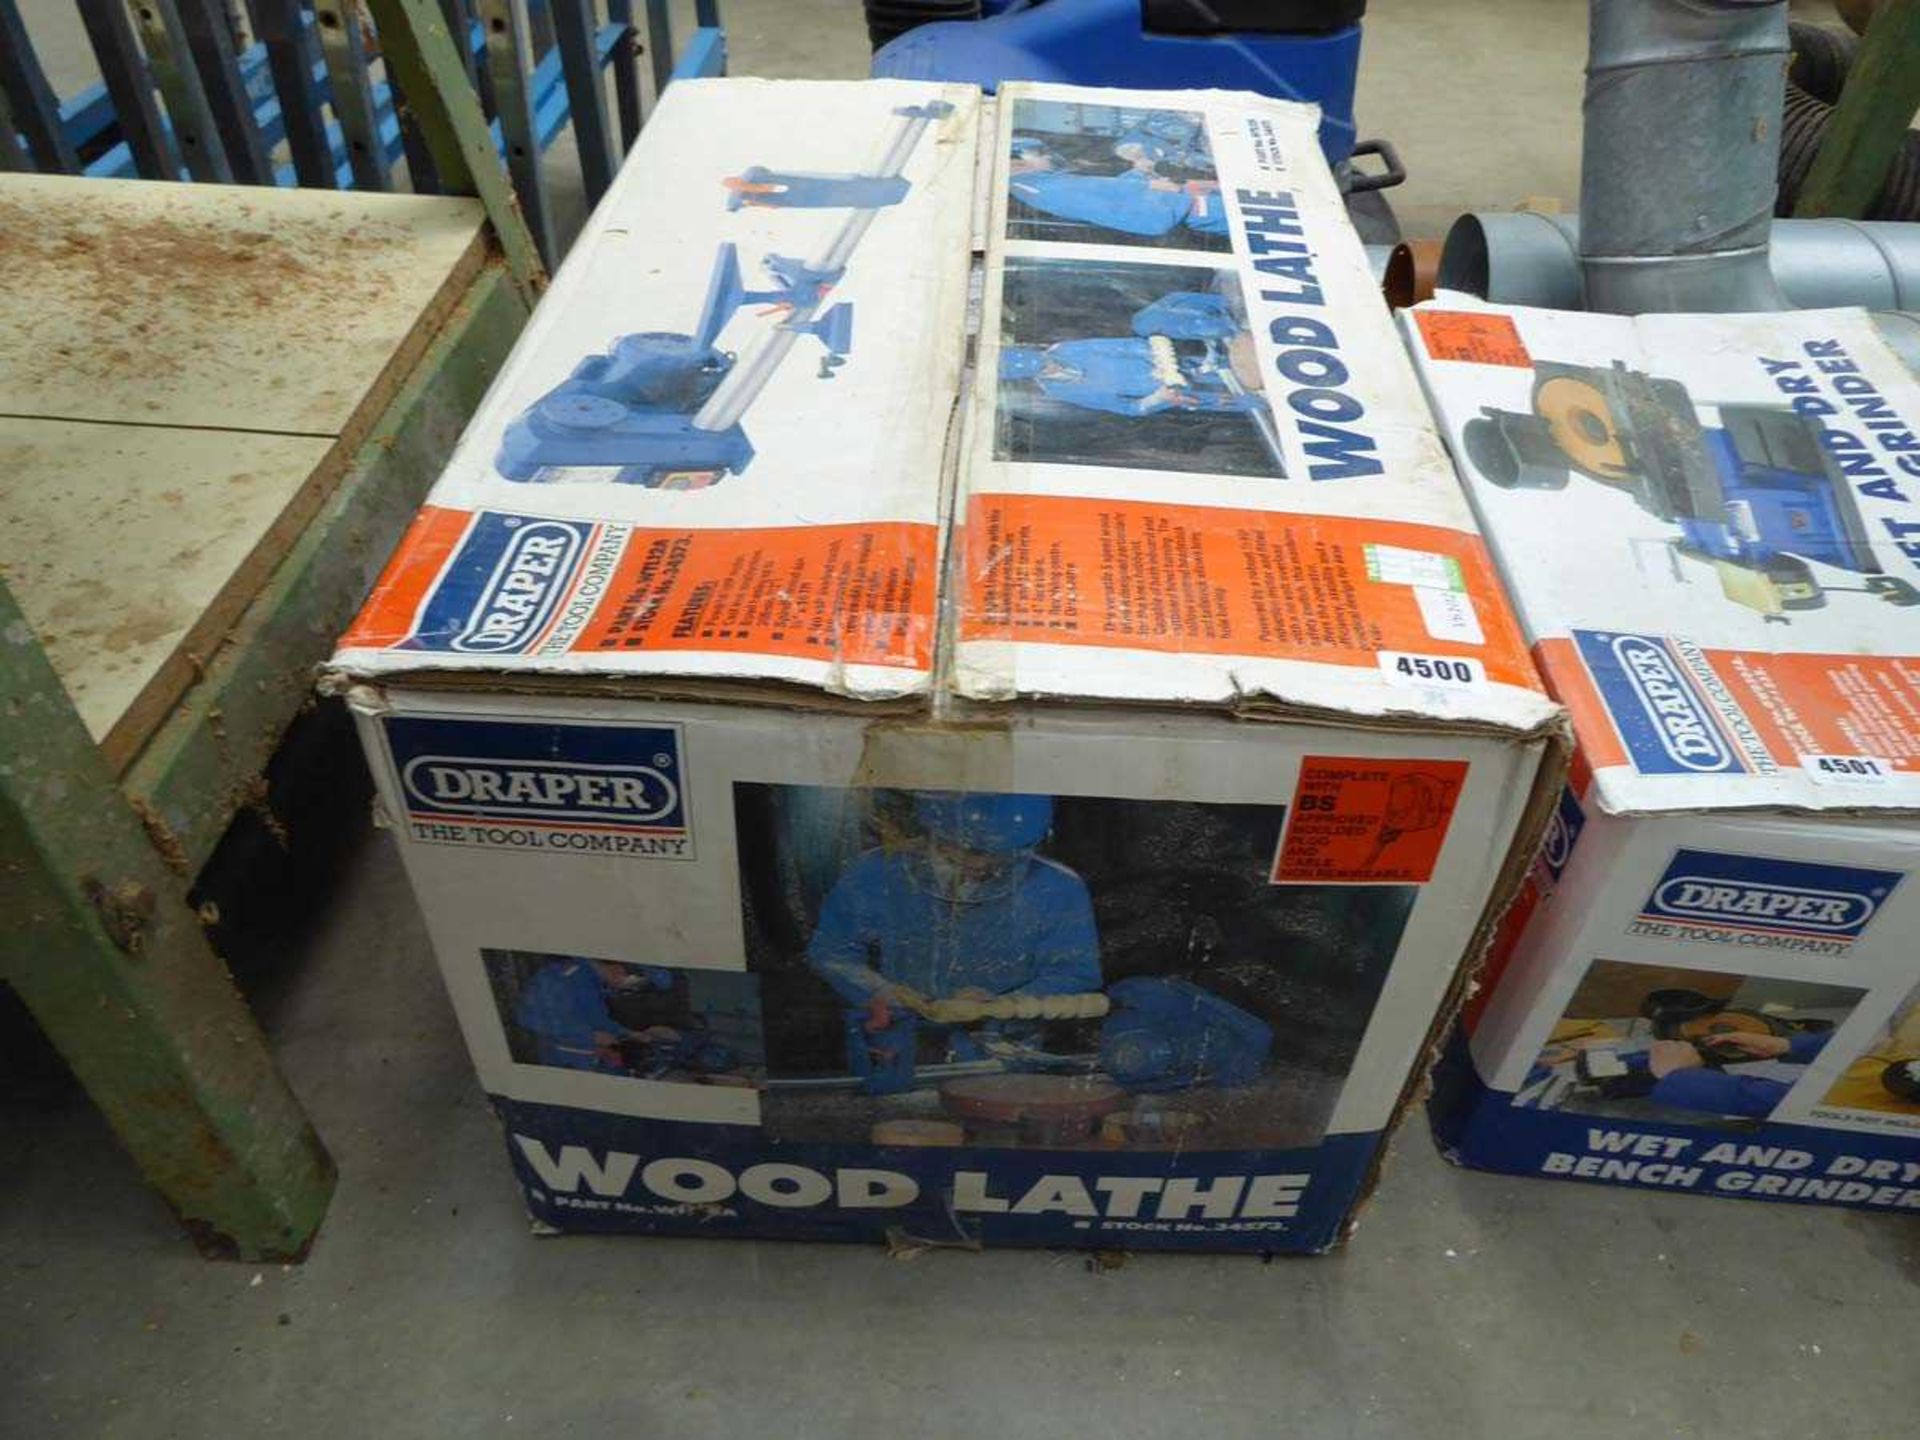 Boxed Draper wood lathe